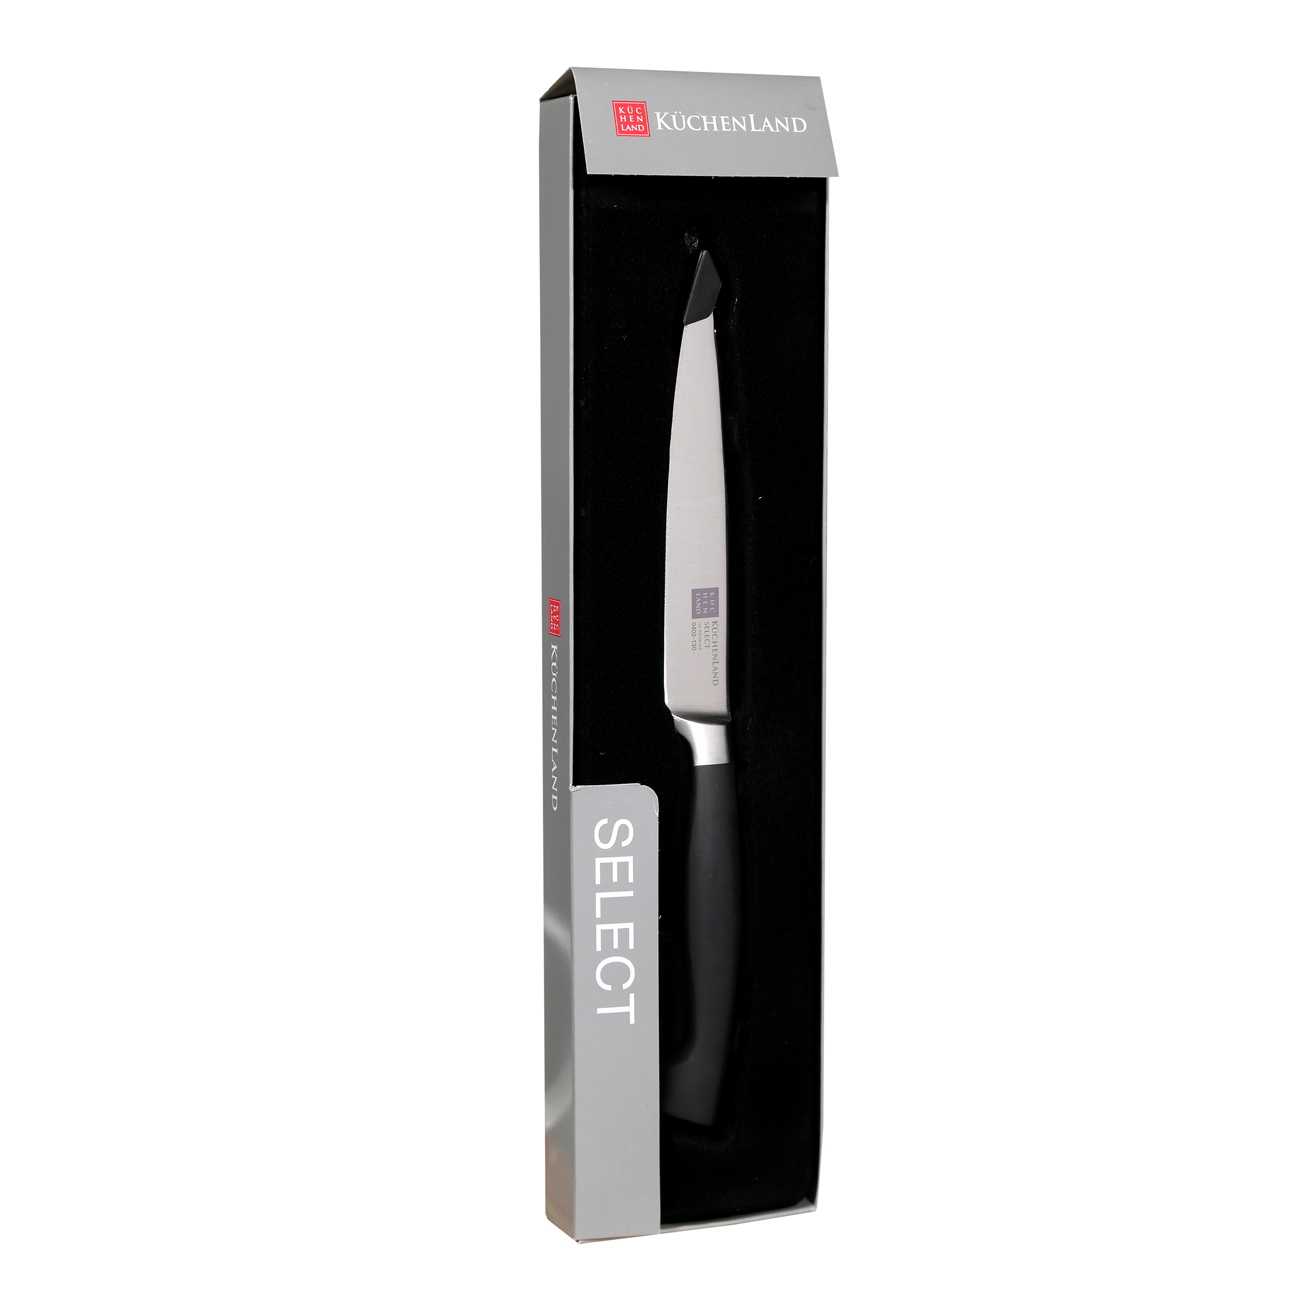 Нож для нарезки, 13 см, сталь/пластик, Select